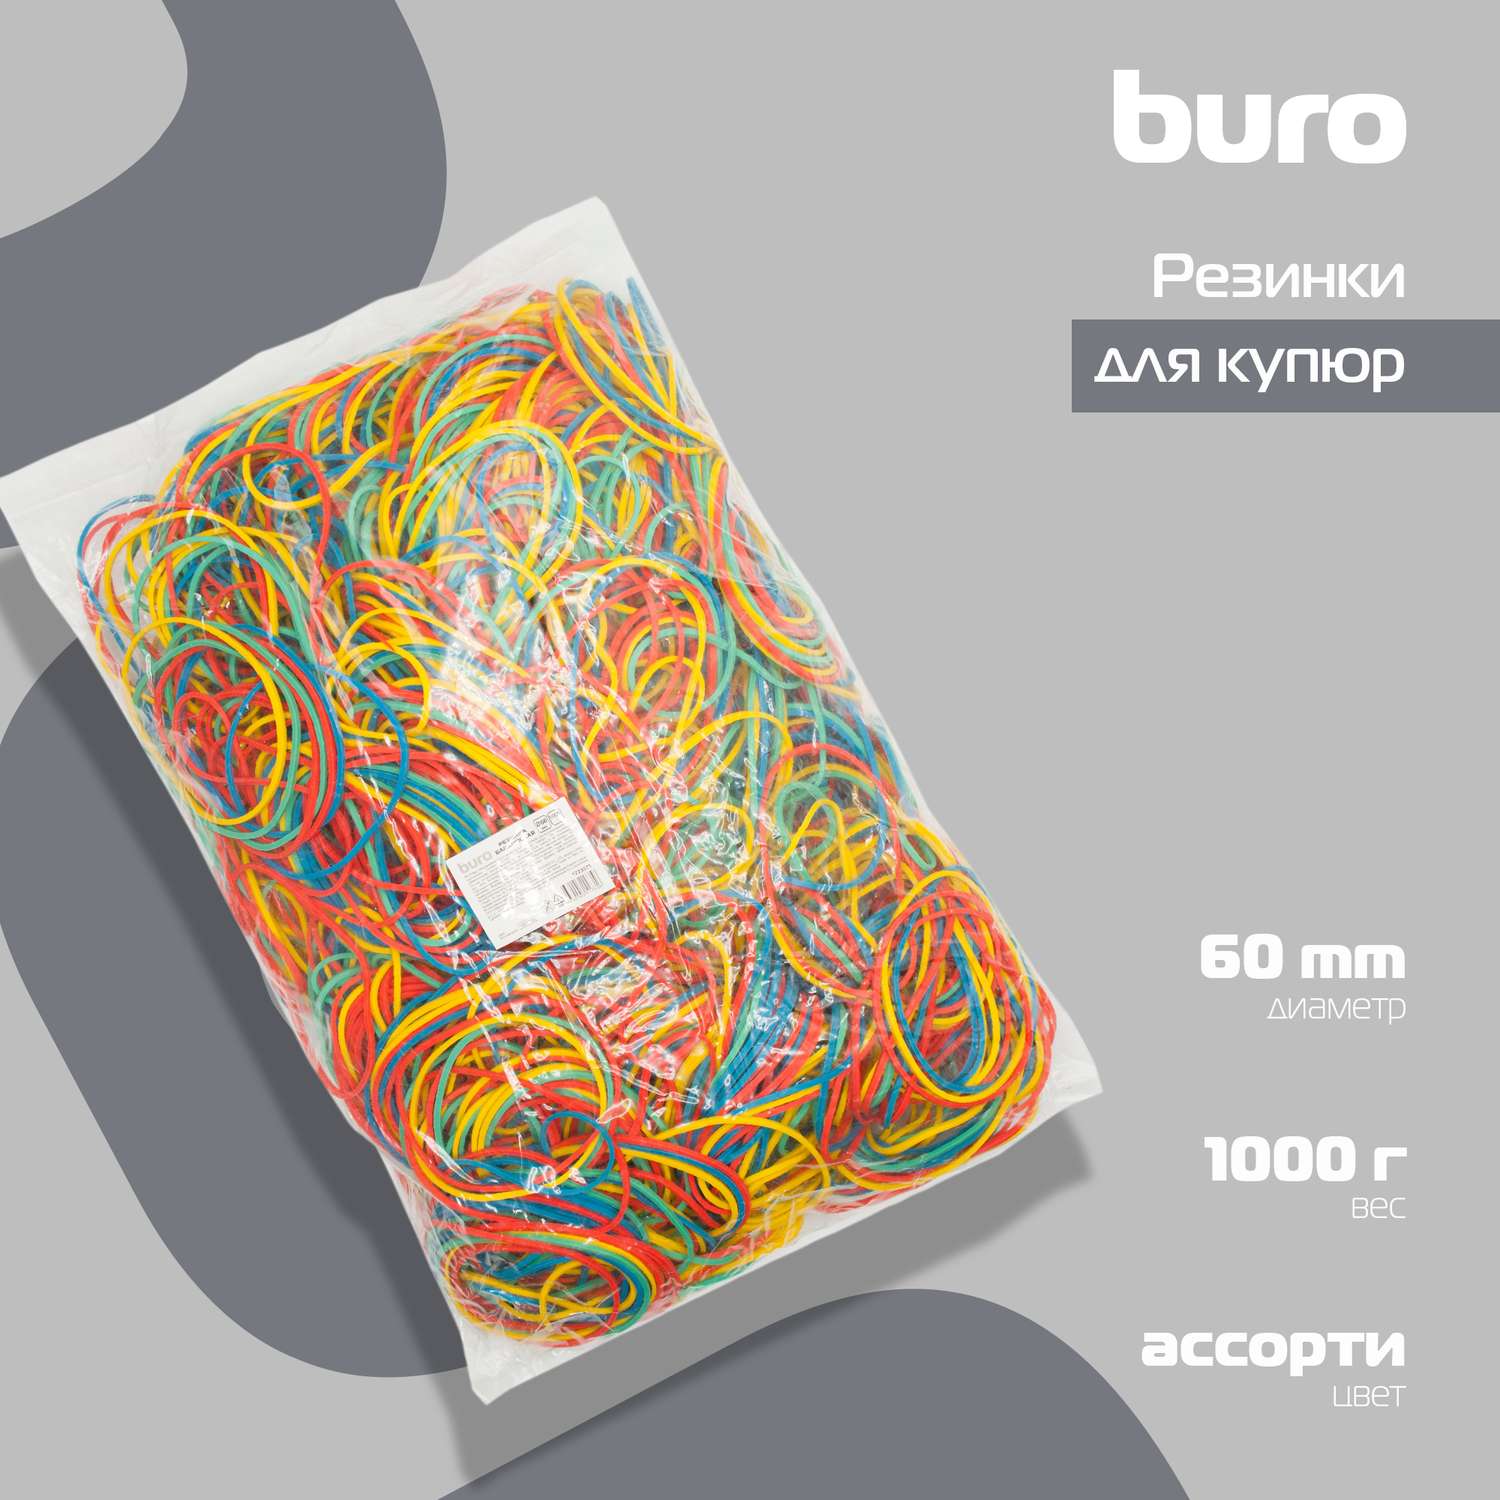 Резинки для купюр Buro 60мм диам. 1.5мм шир. 1000грамм ассорти пластиковый пакет - фото 1